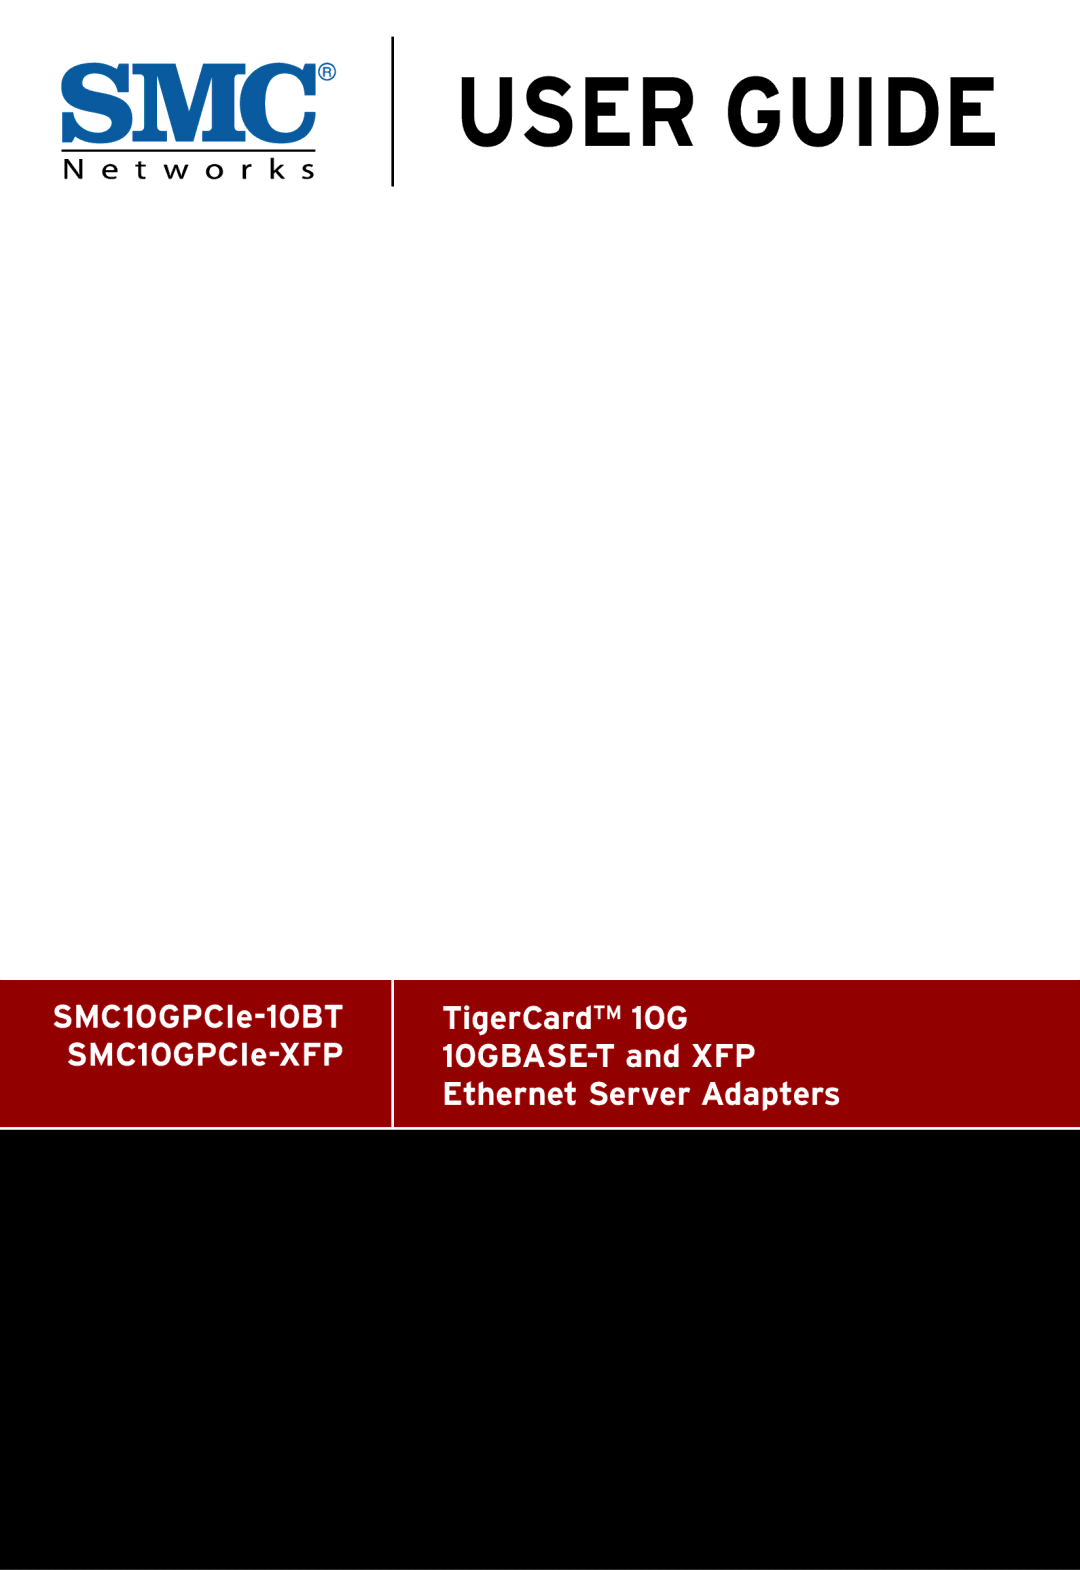 SMC Networks SMC10GPCIe-XFP manual User Guide 